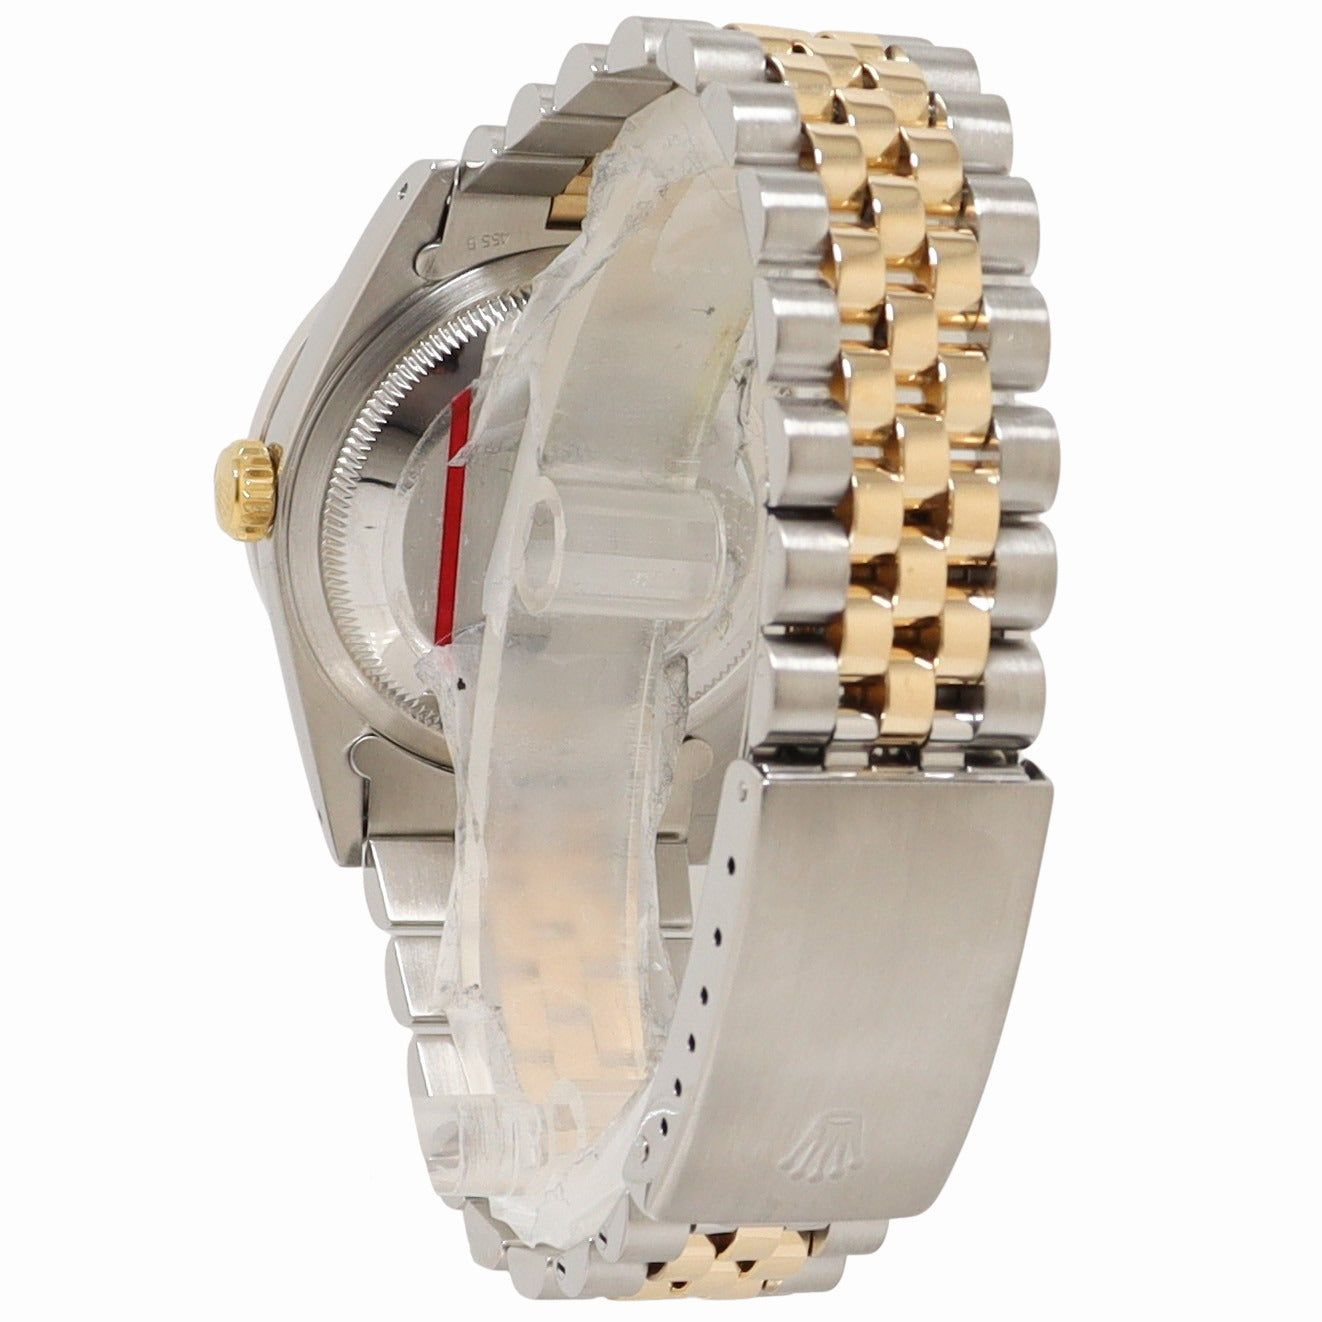 Rolex Datejust Two Tone Yellow Gold & Steel 36mm Custom White MOP Diamond Dial Watch Reference#: 16233 - Happy Jewelers Fine Jewelry Lifetime Warranty